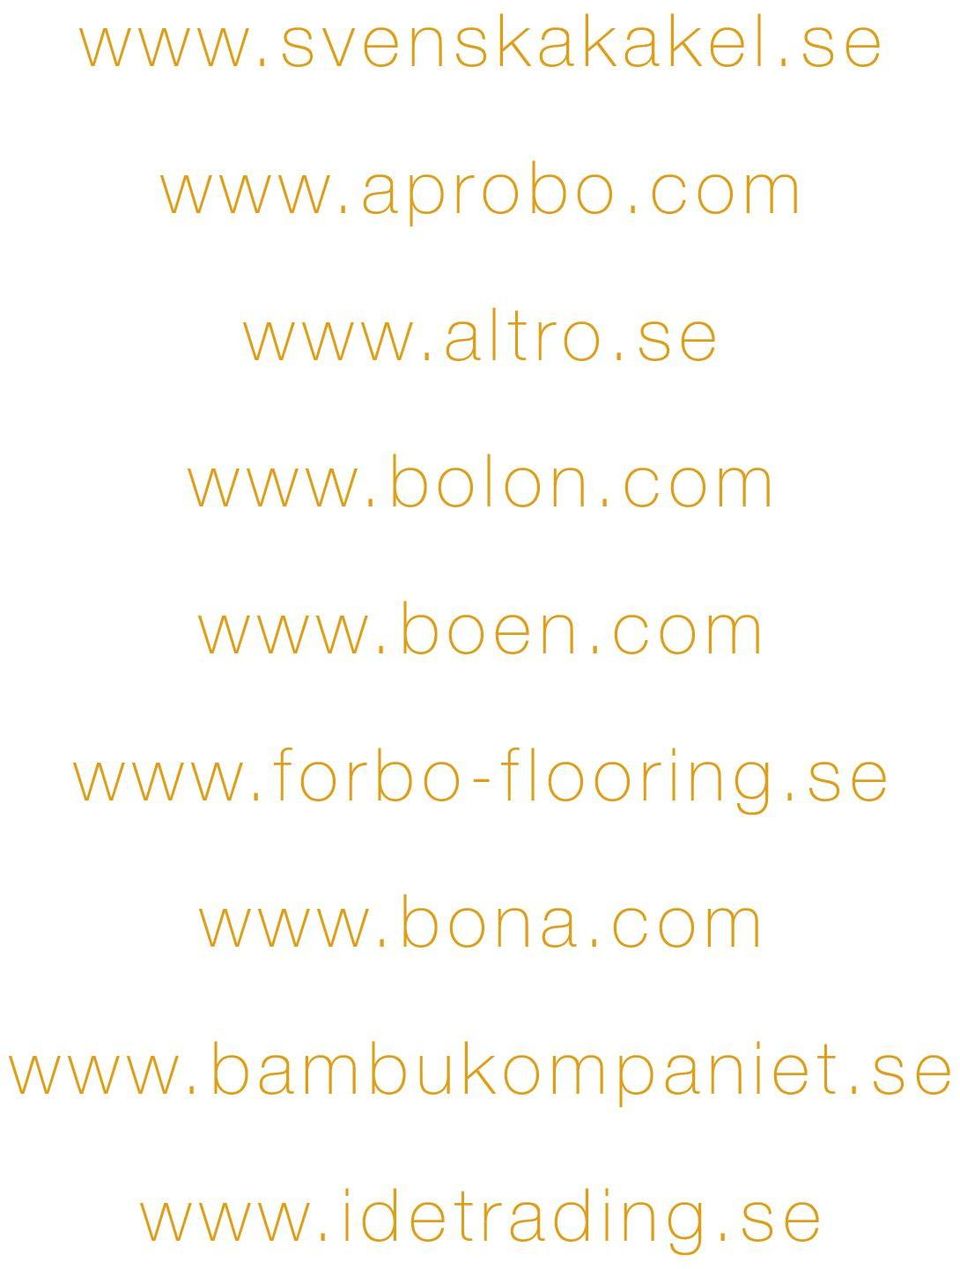 com www.forbo-flooring.se www.bona.